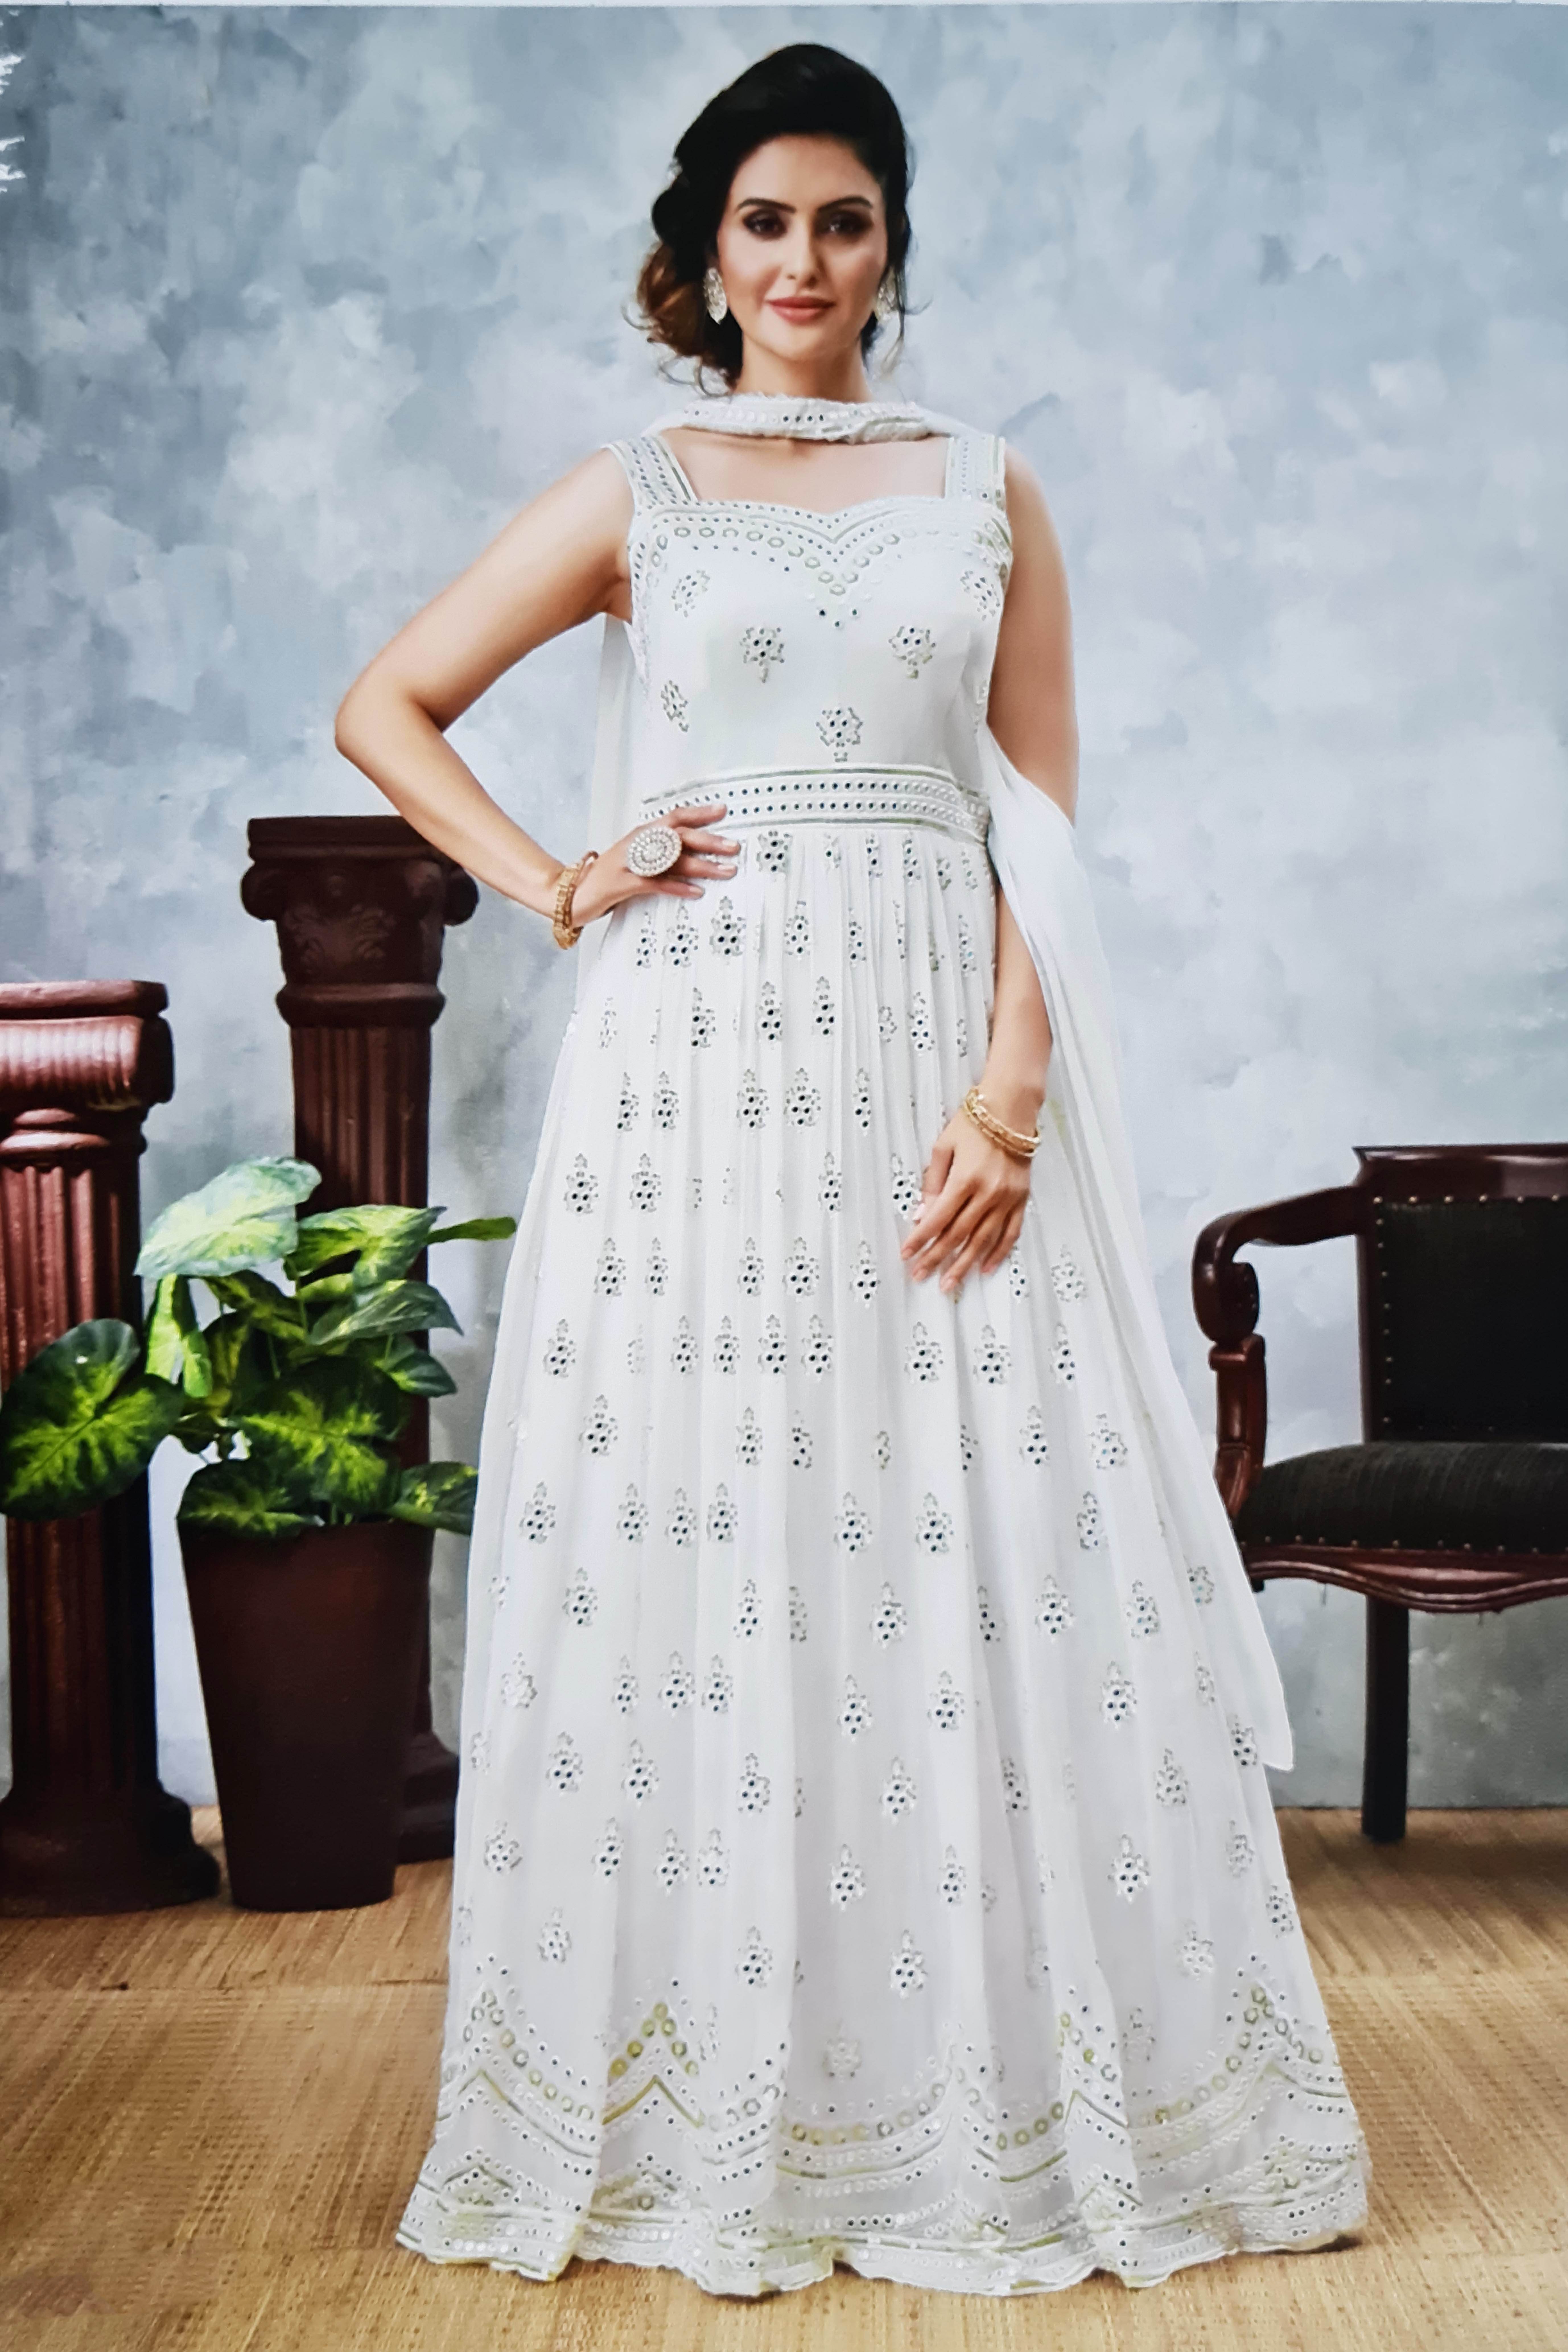 Buy Raabta Fashion Women Plain White Dress at shopclues.com